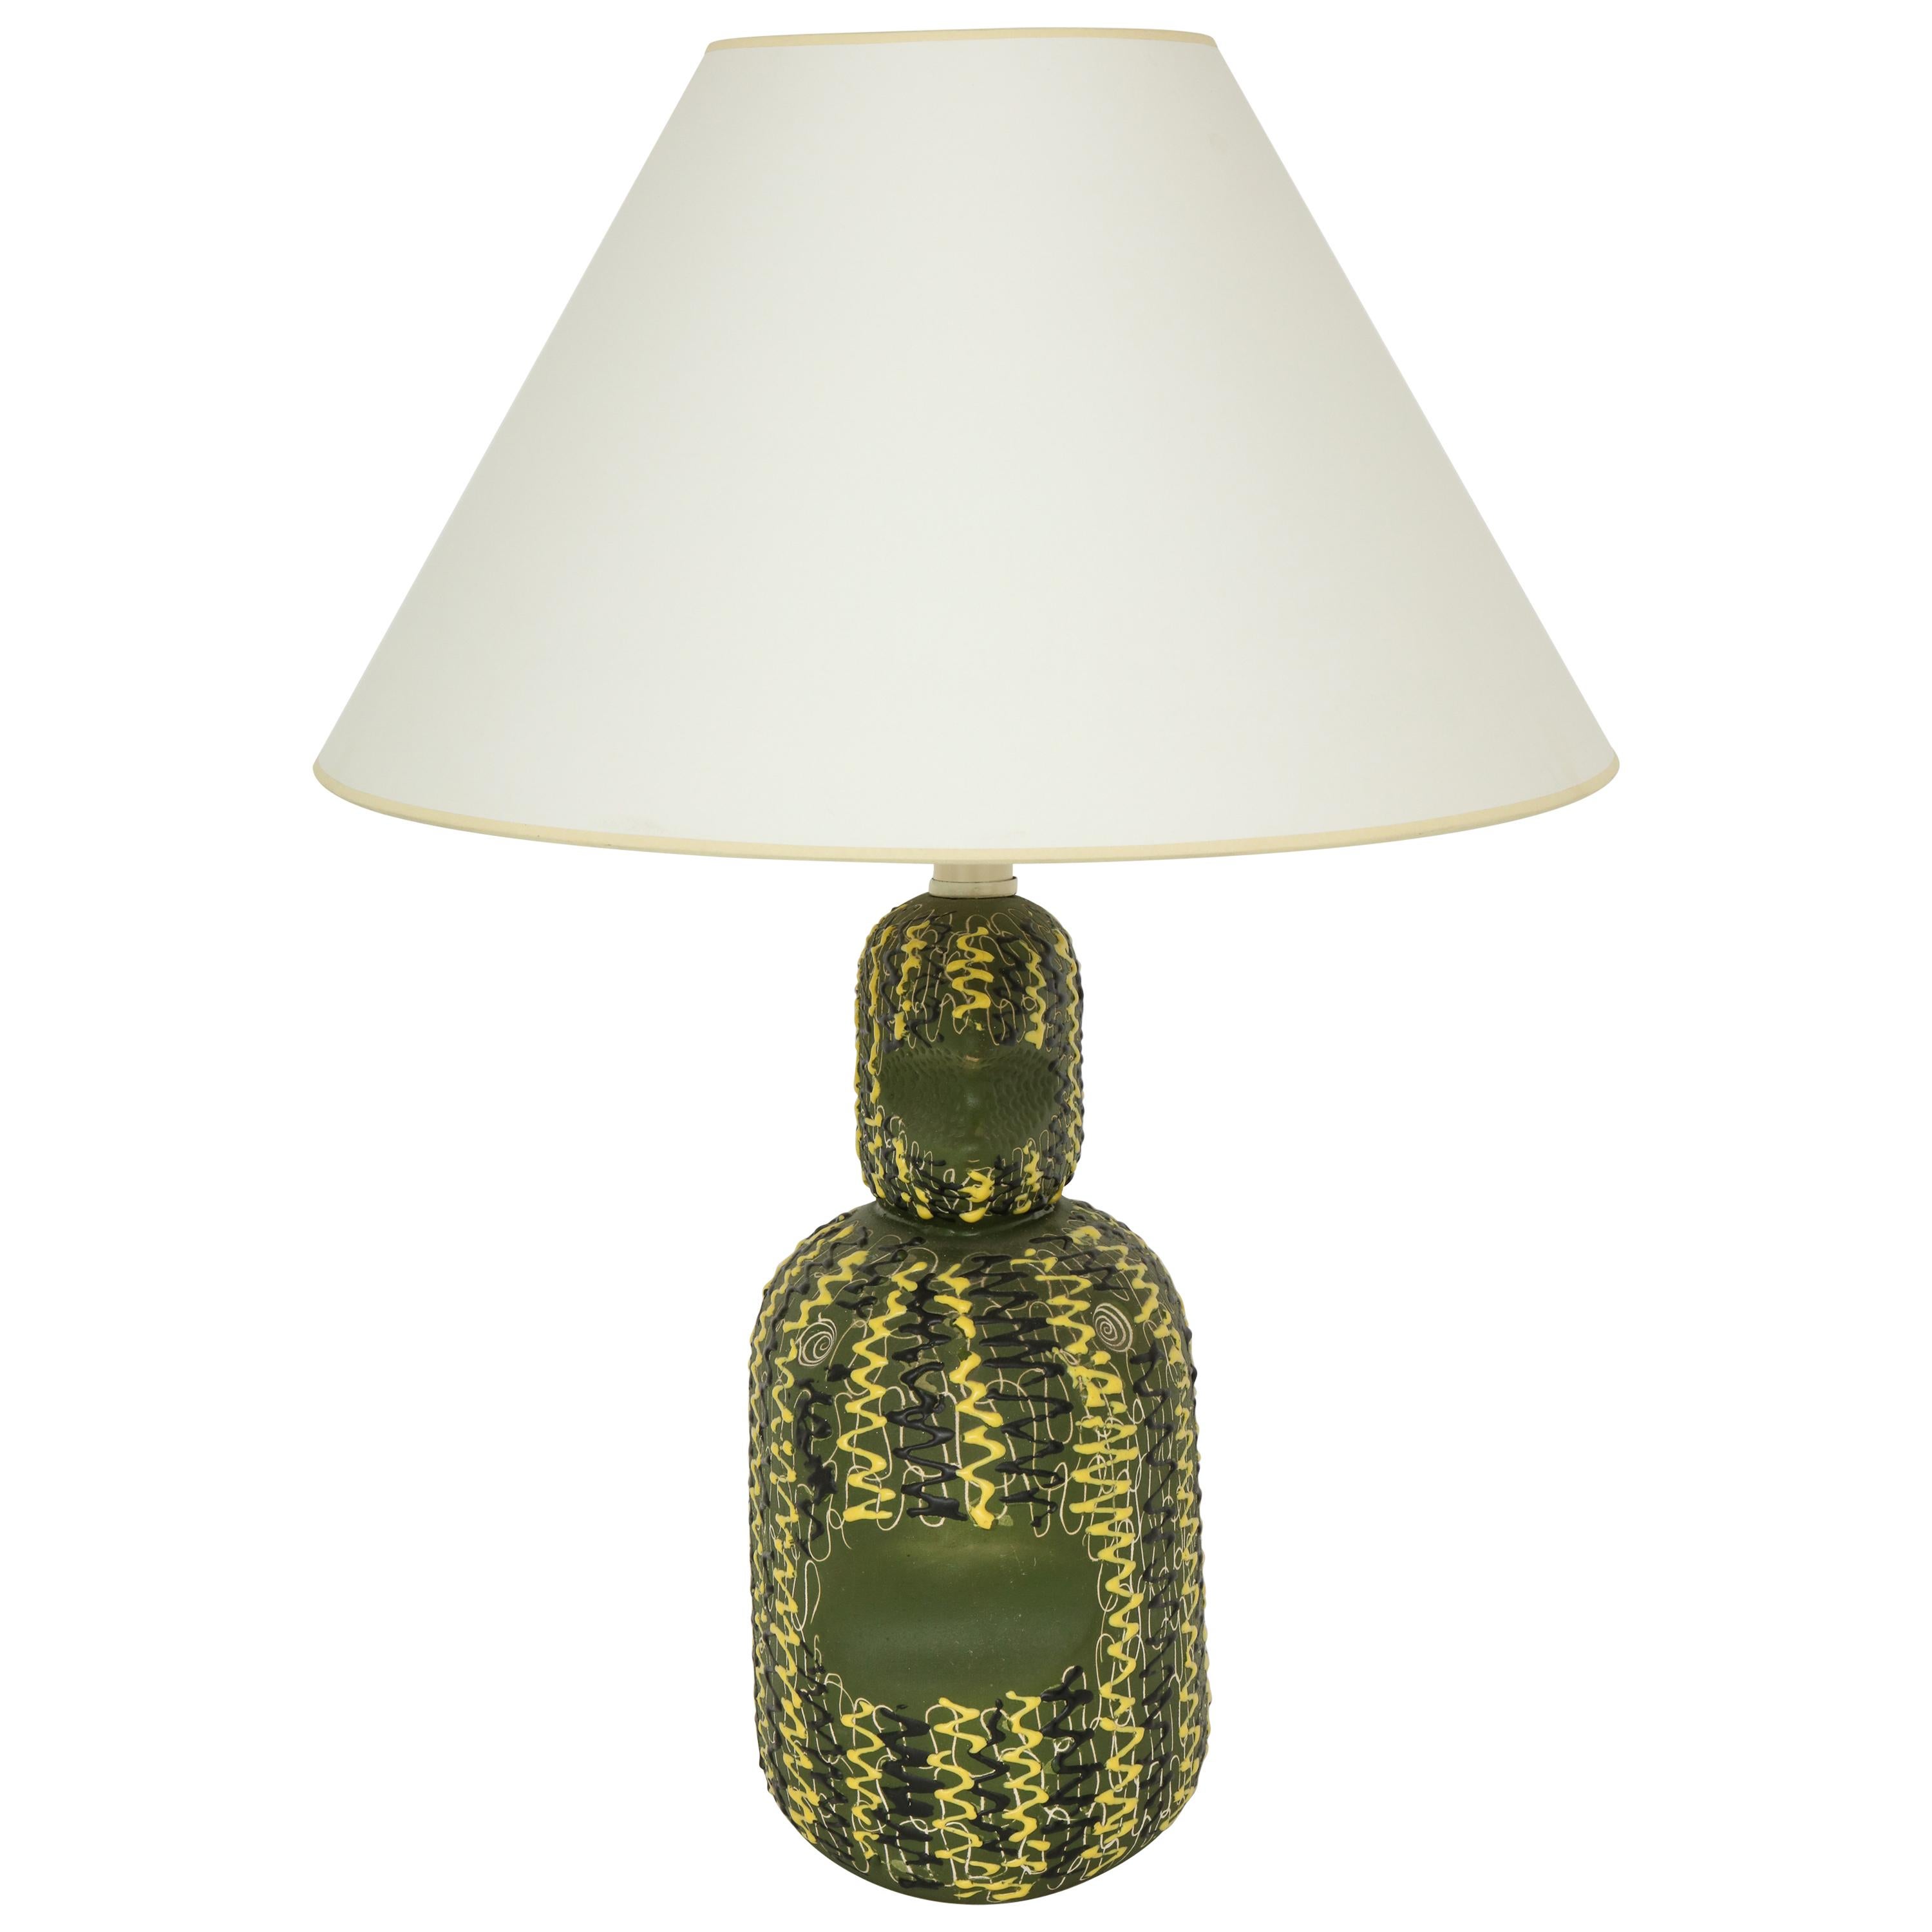 Italian Midcentury Green & Yellow Ceramic Table Lamp For Sale